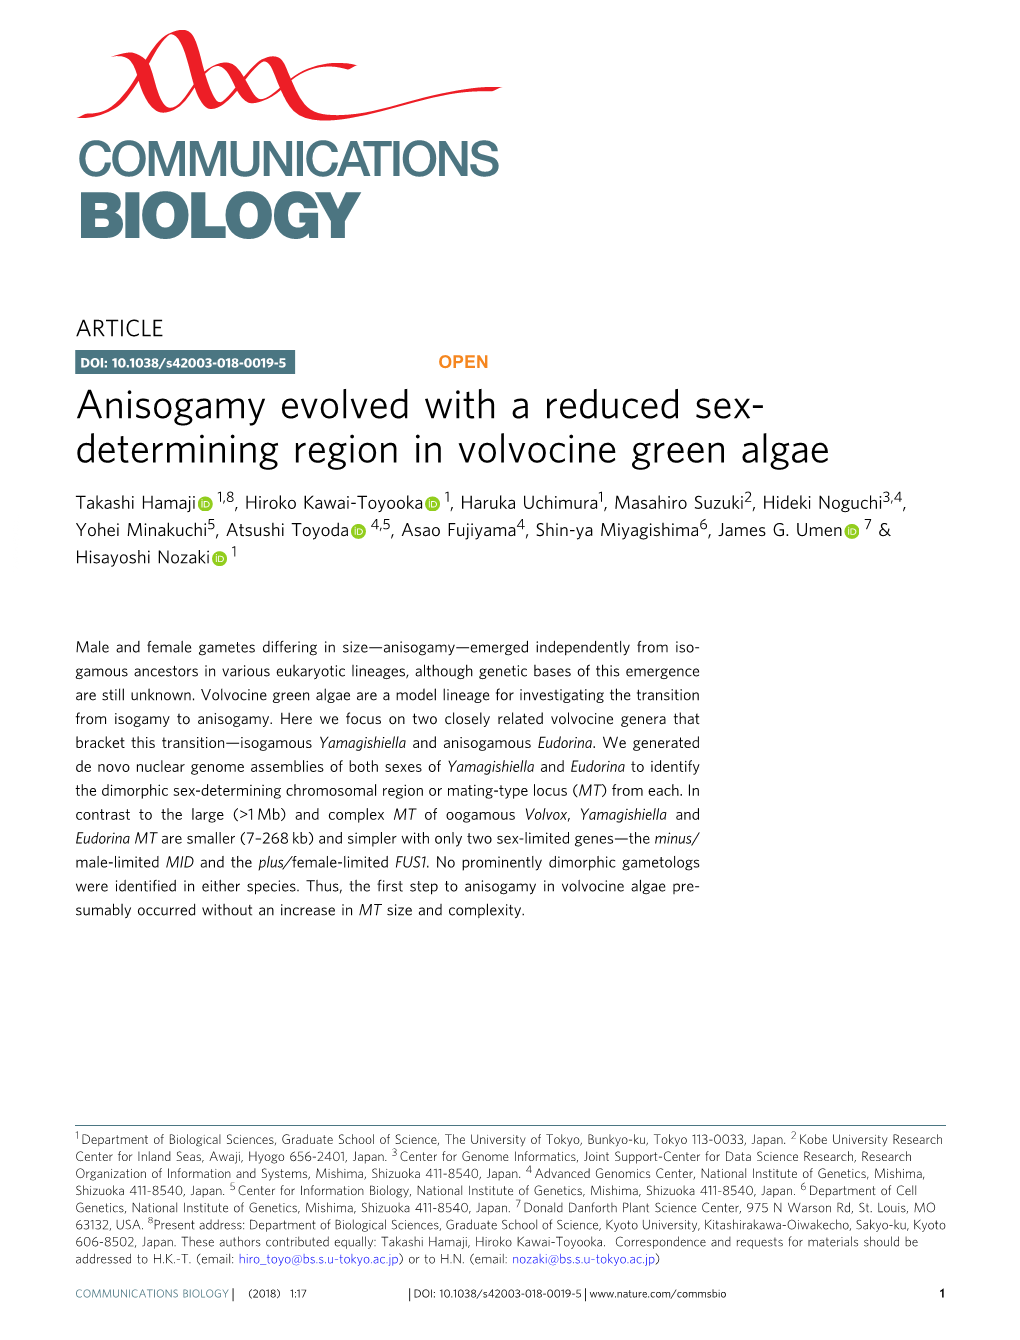 Anisogamy Evolved with a Reduced Sex-Determining Region in Volvocine